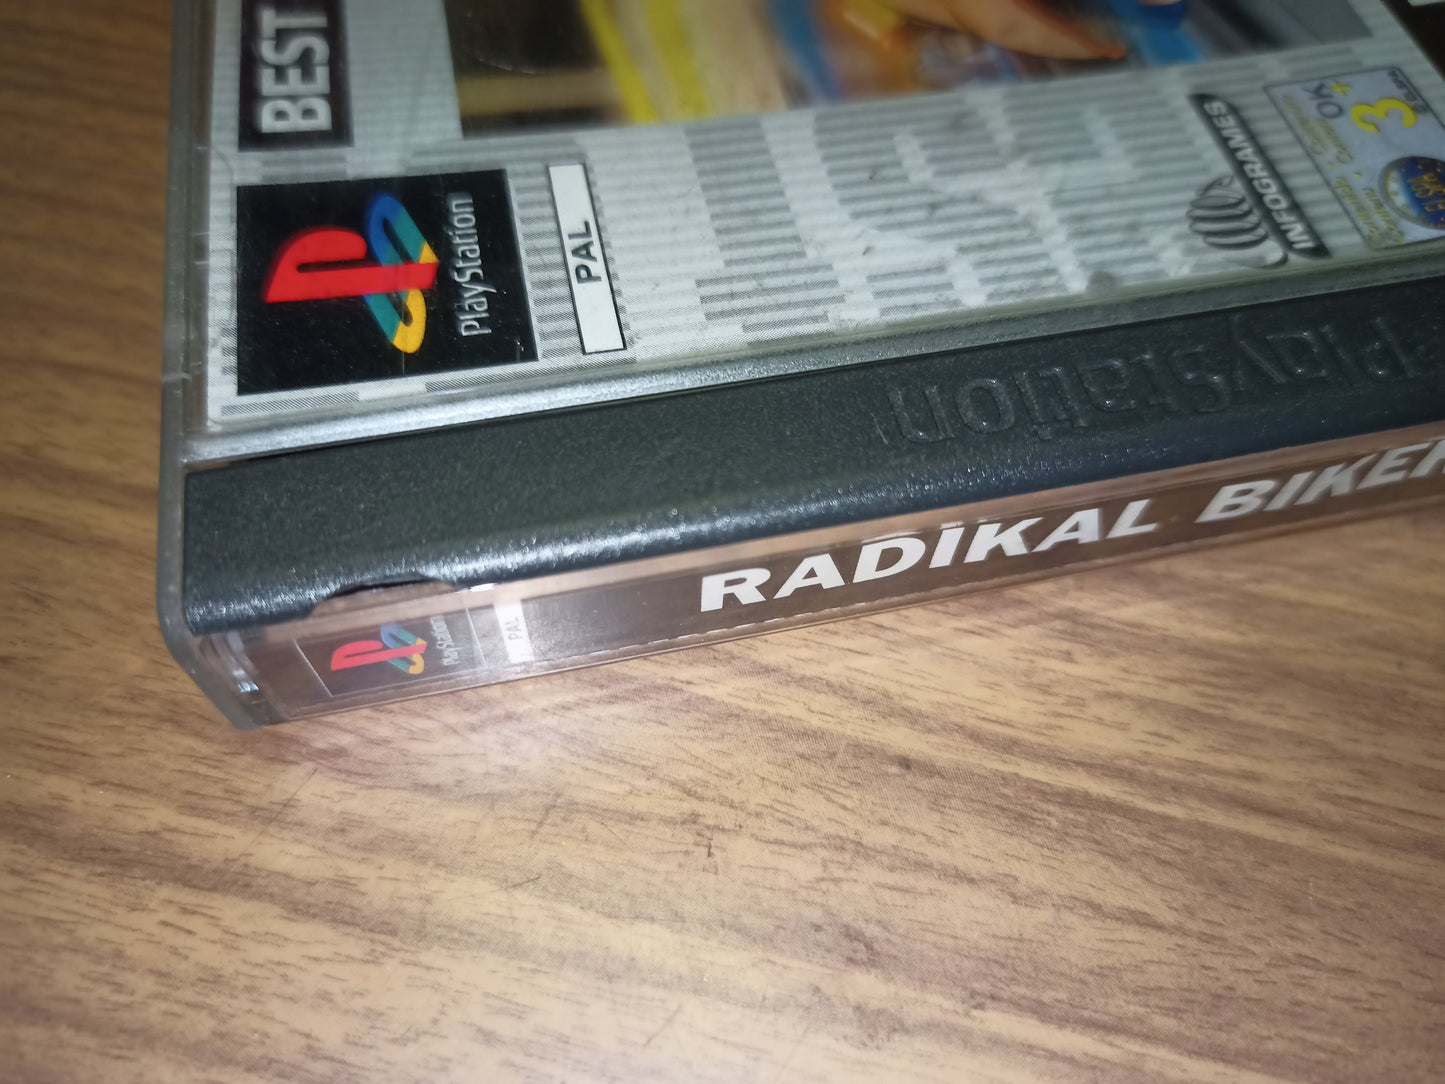 Videogioco Radikal Bikers per PlayStation 1